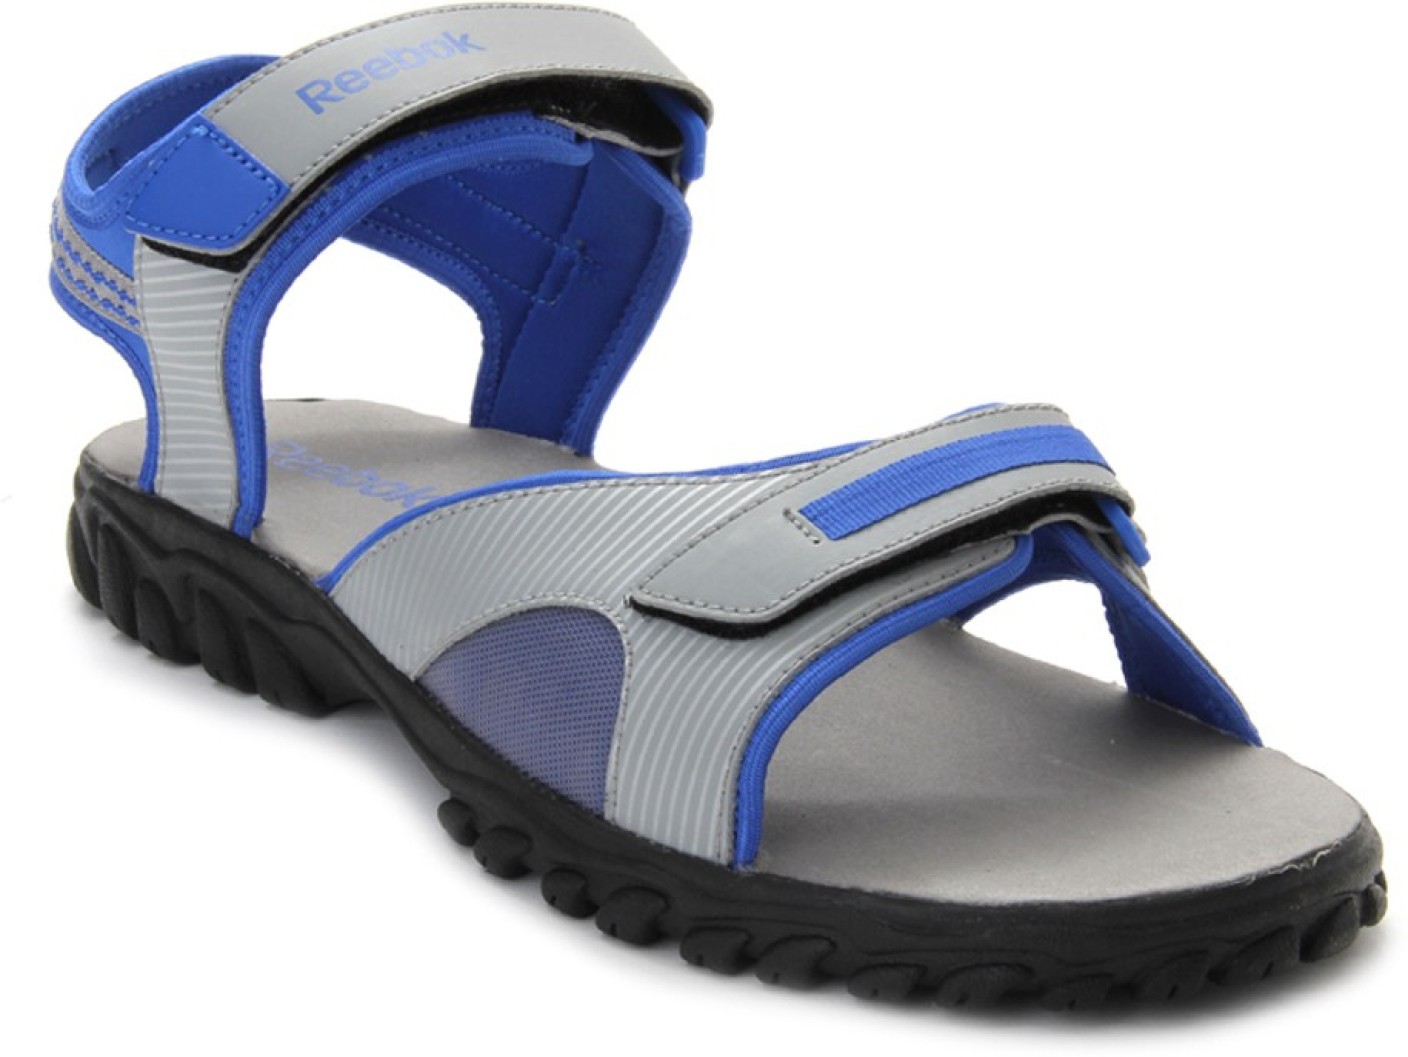  Reebok  Men Vital Blue Flat Grey Sports Sandals  Buy 